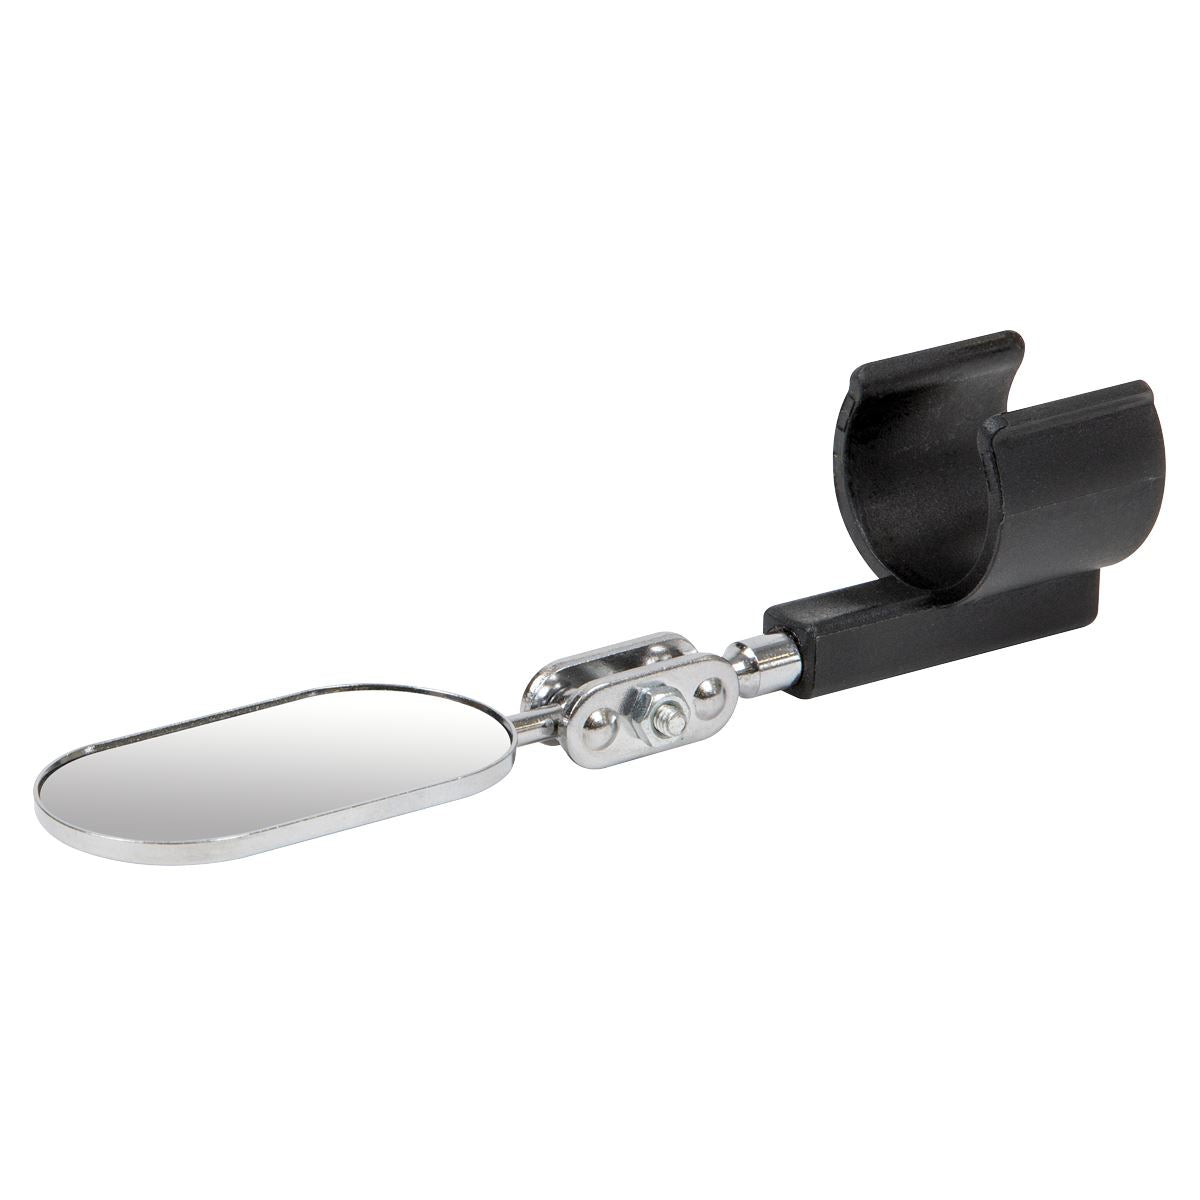 Sealey Narrow Mirror for LED Pick-Up Tool